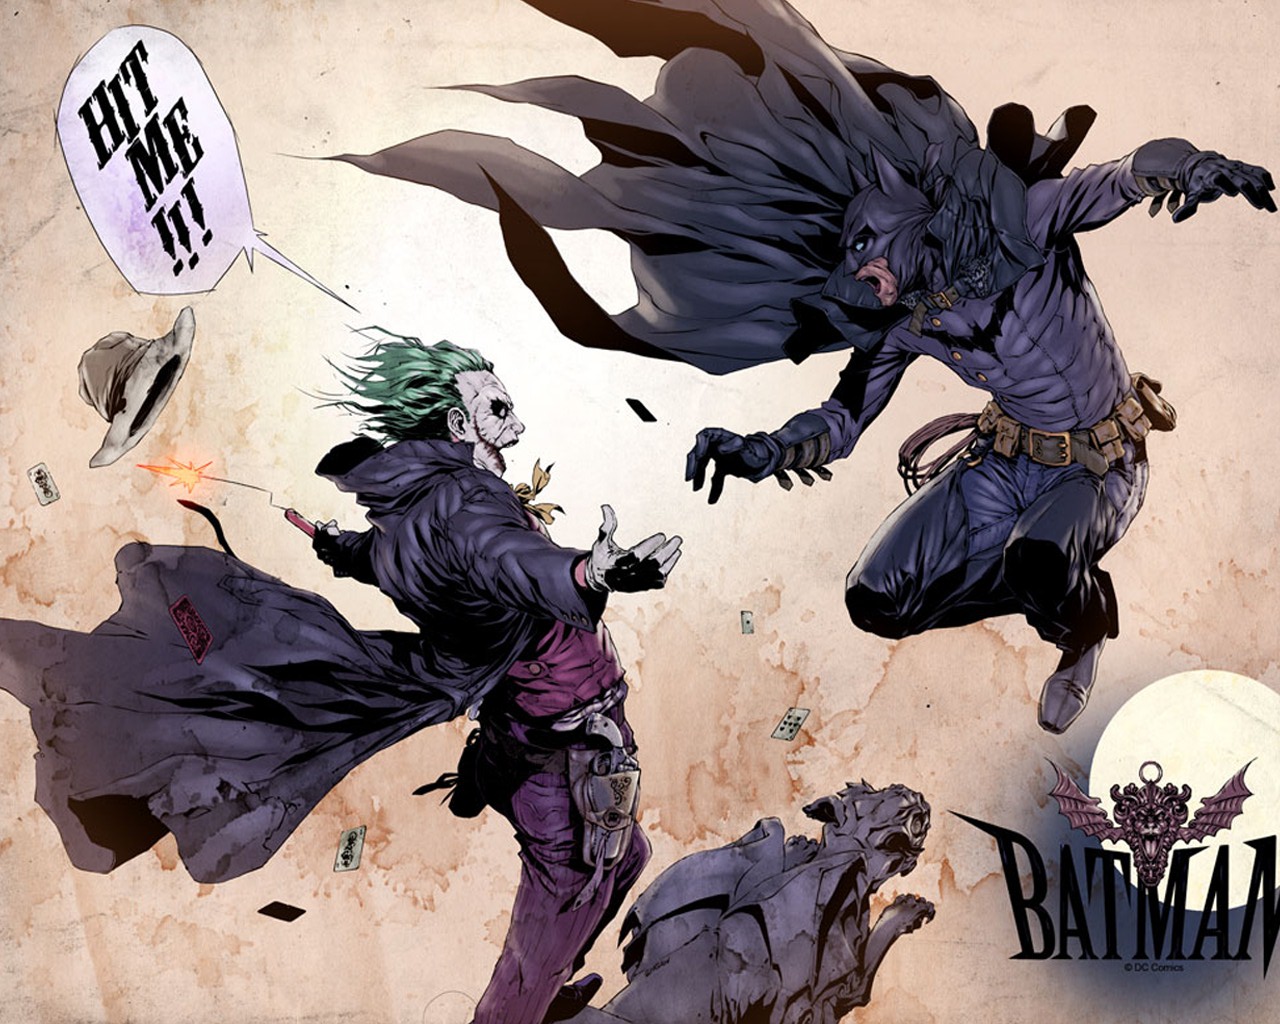 Download Wallpaper batman dc comics the joker alternative art western batman the dark knight -33977-29